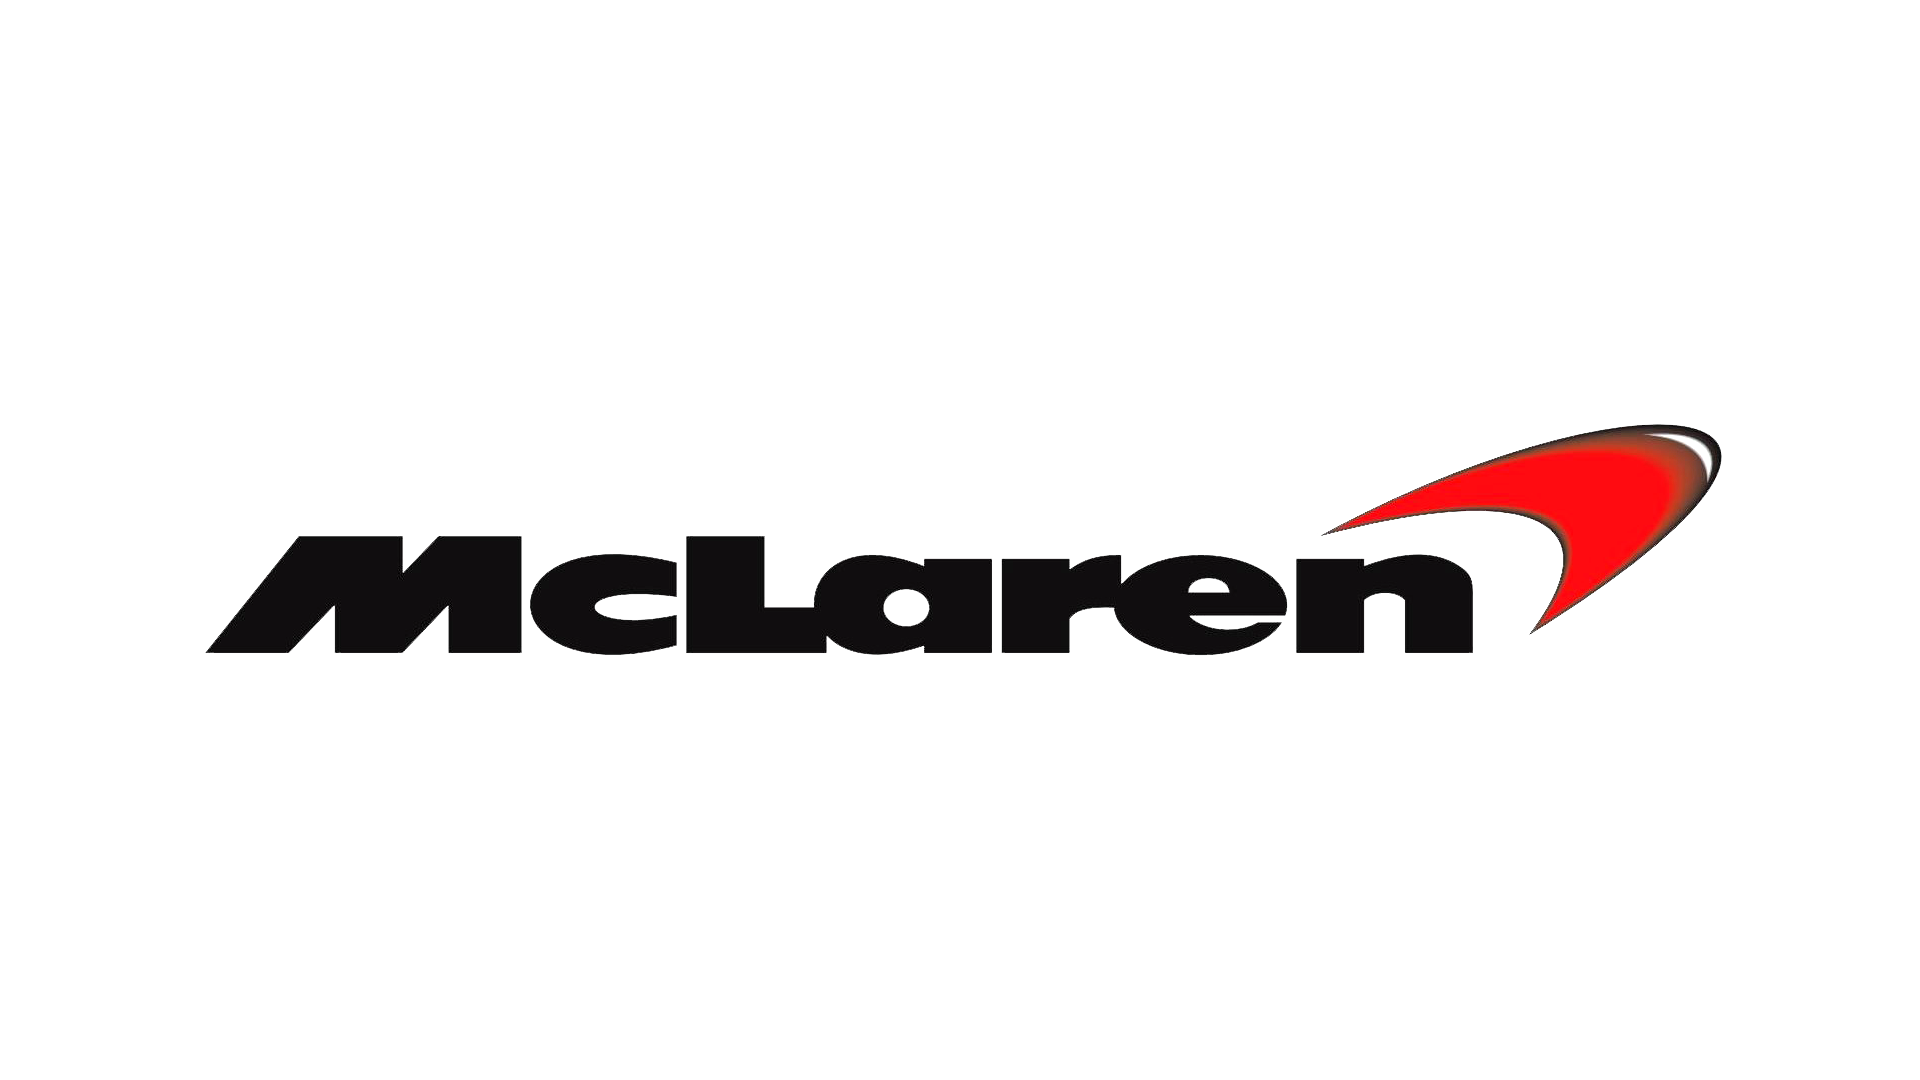 Mclaren – Logos Download